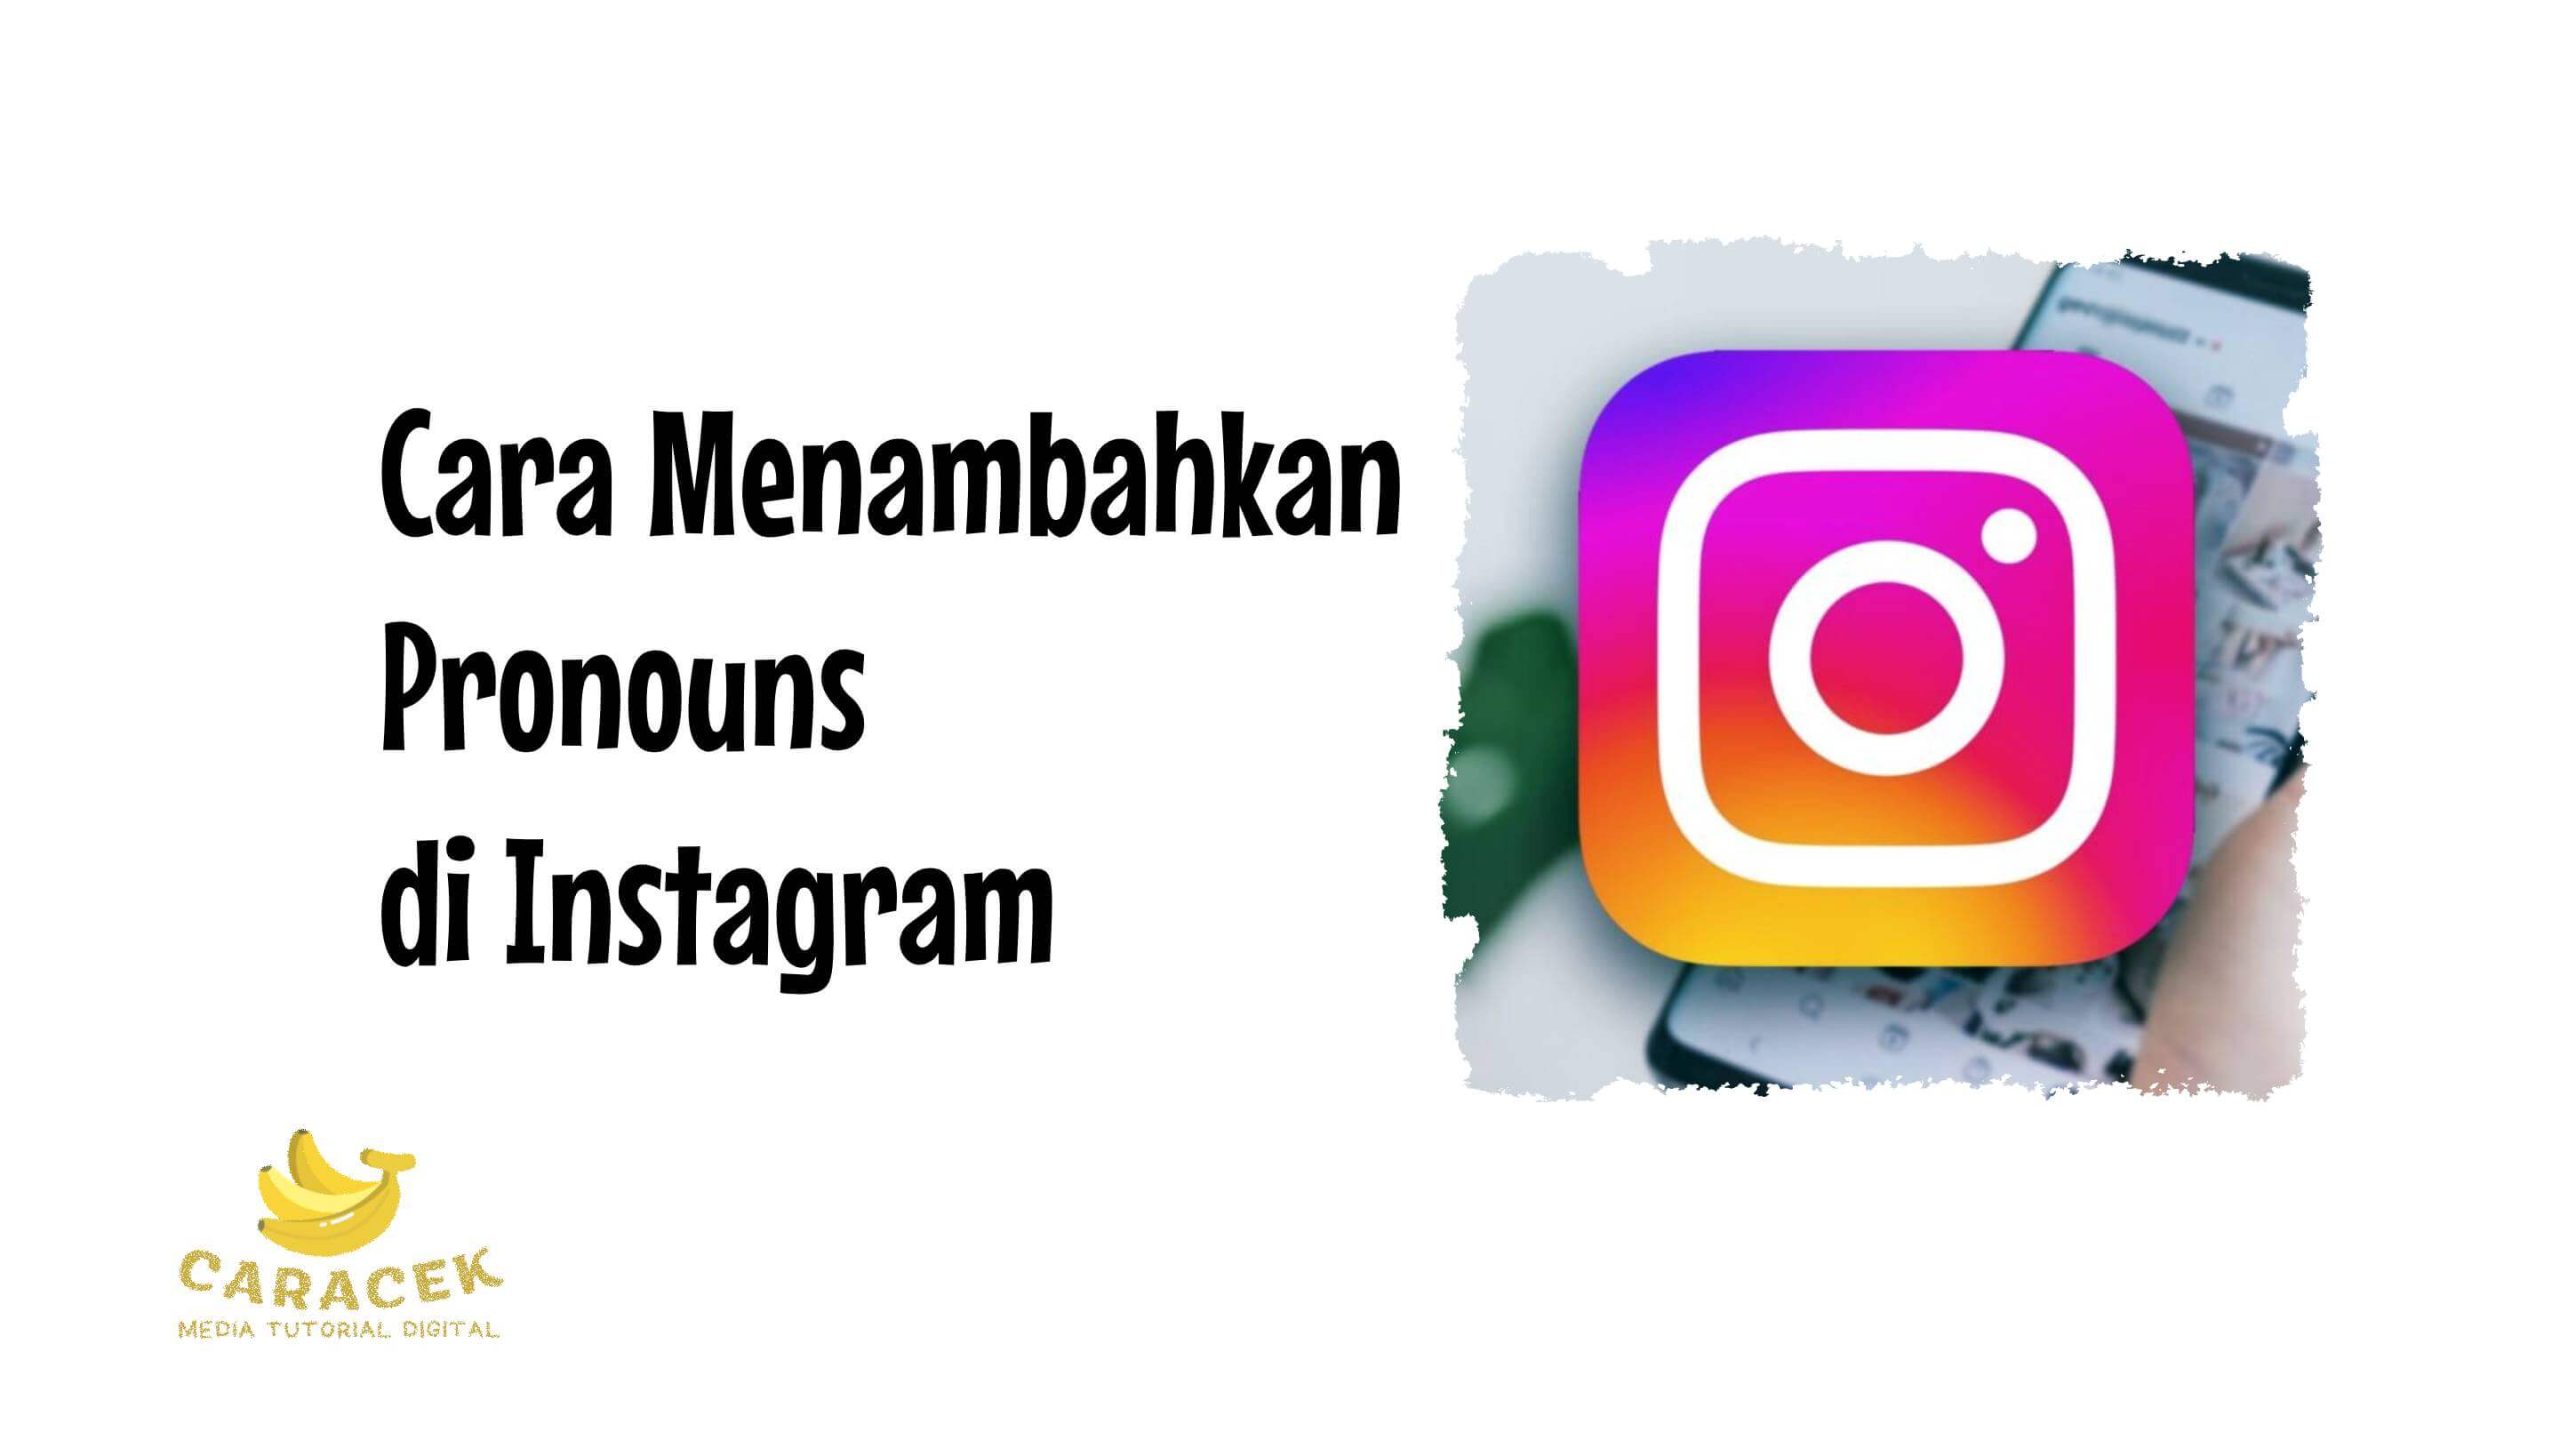 Cara Menambahkan Pronouns di Instagram